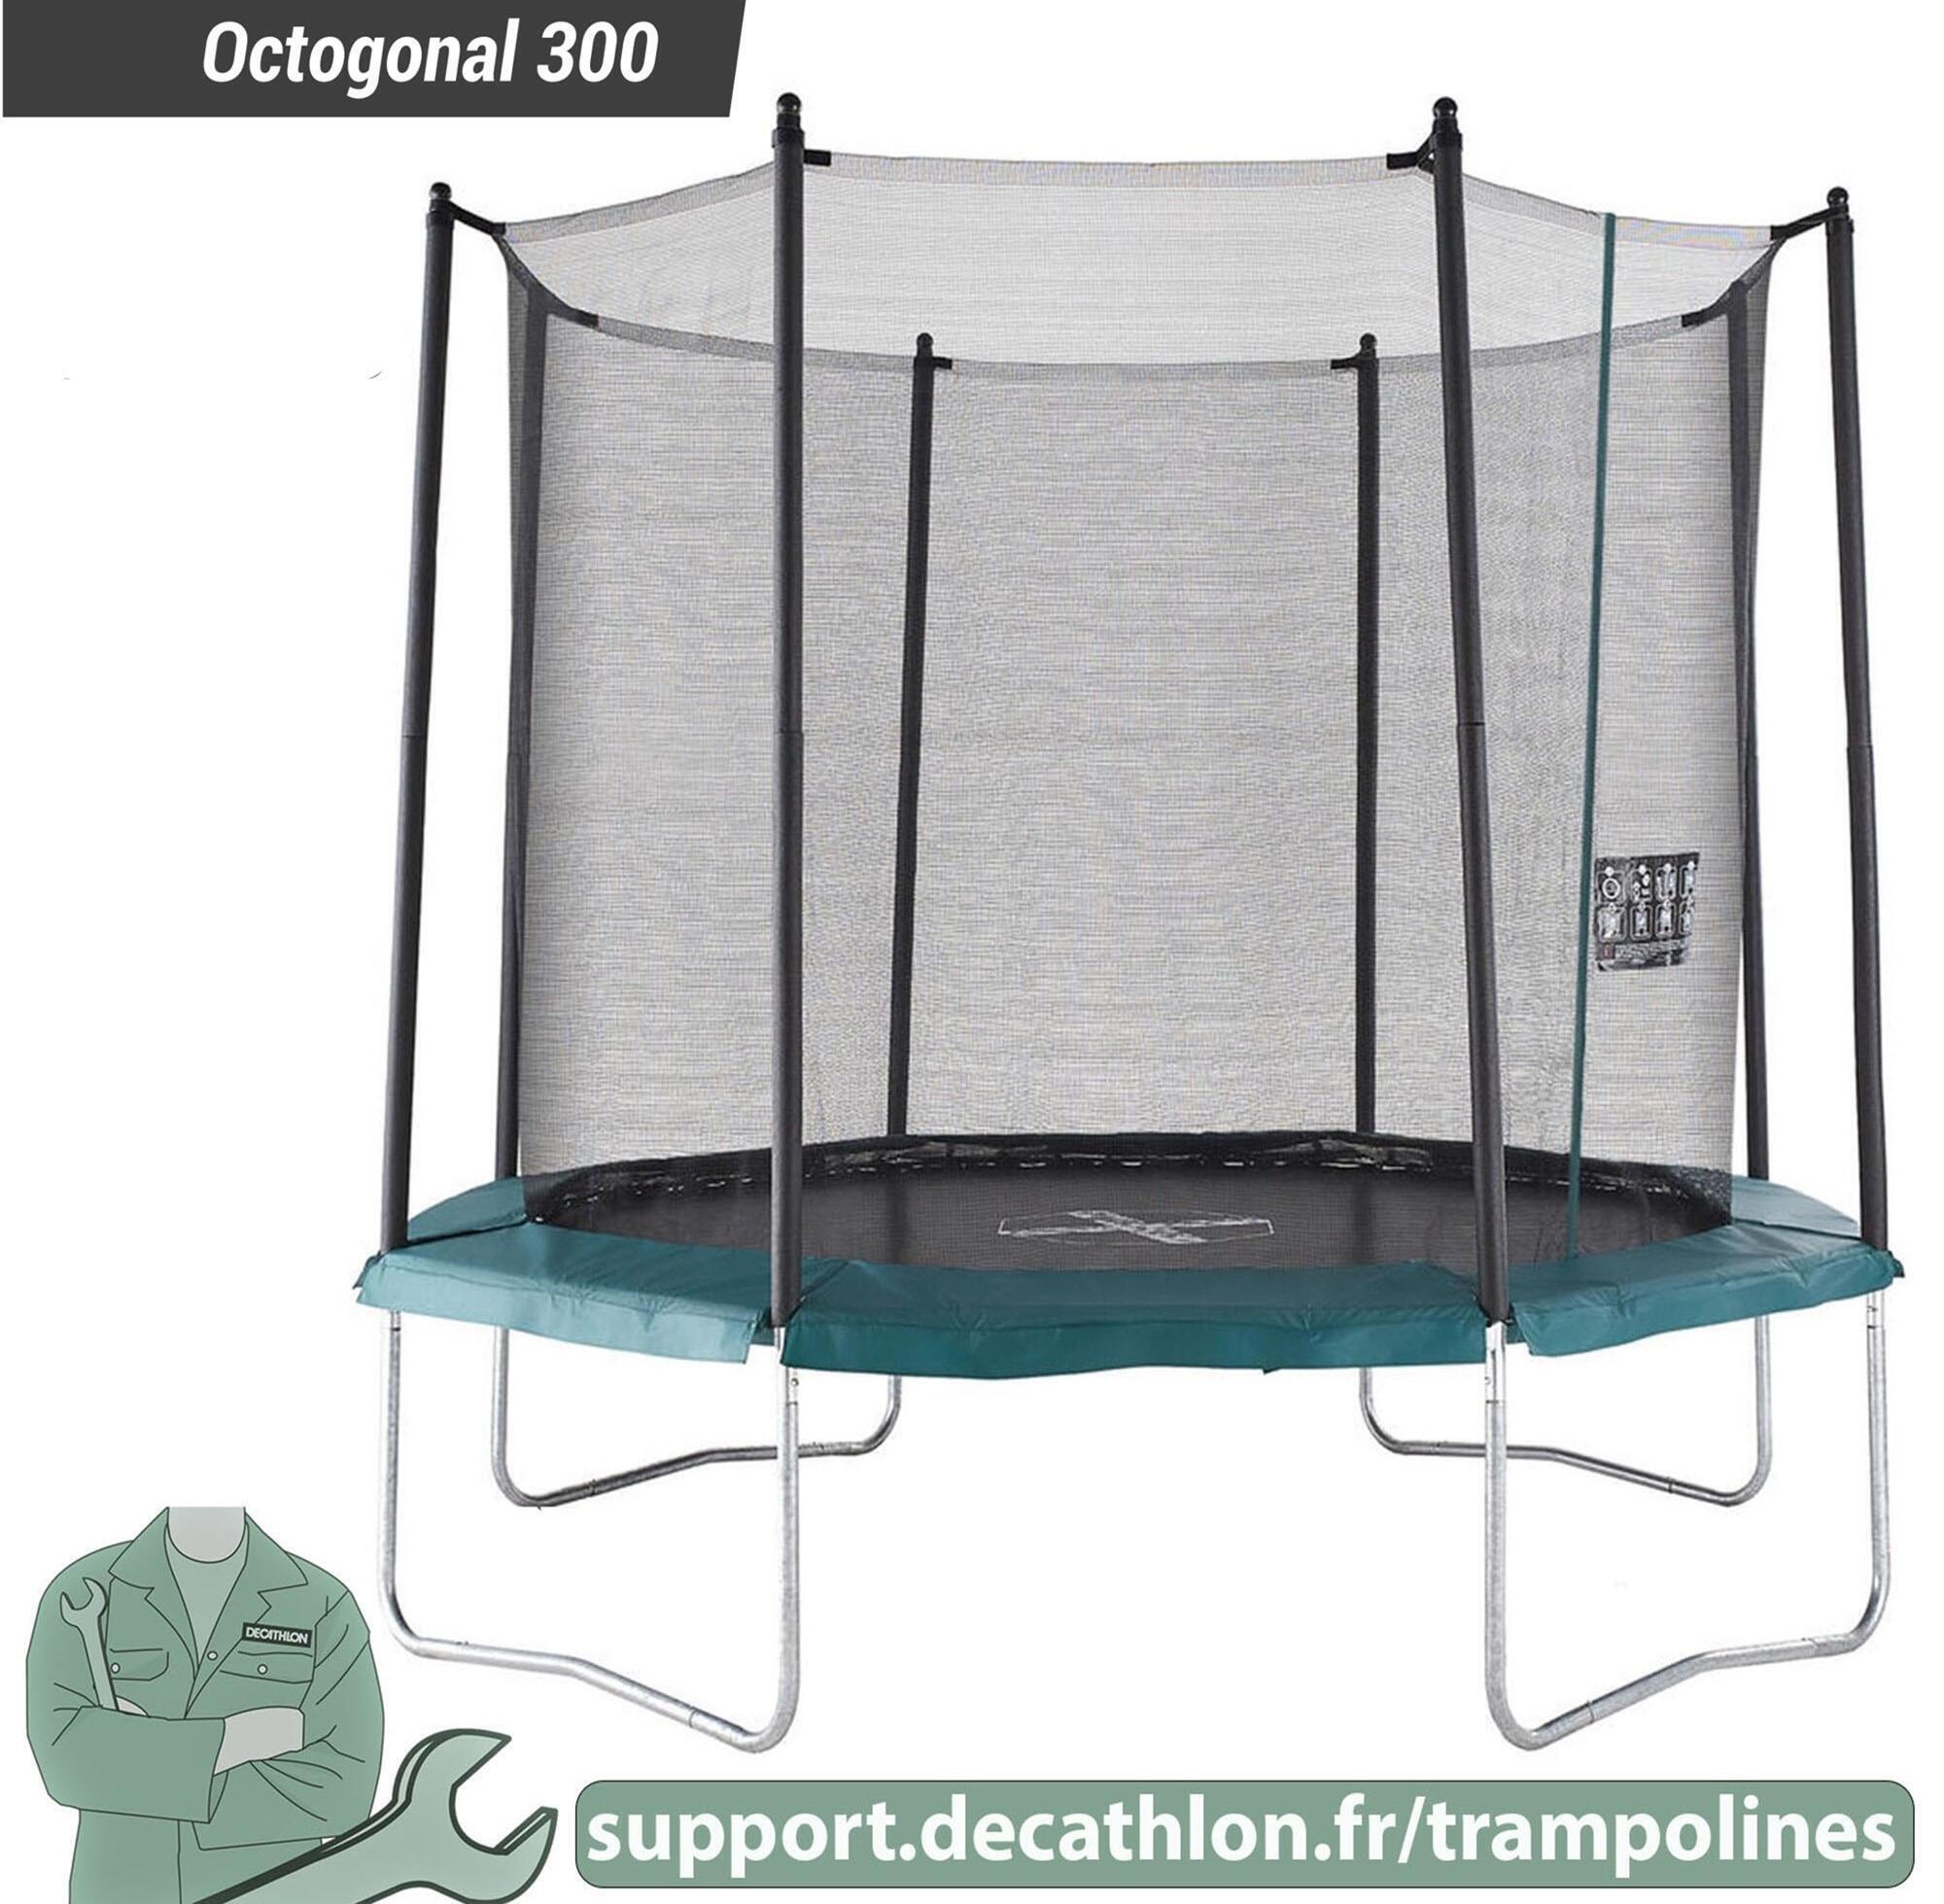 Octagonal 300 Trampoline